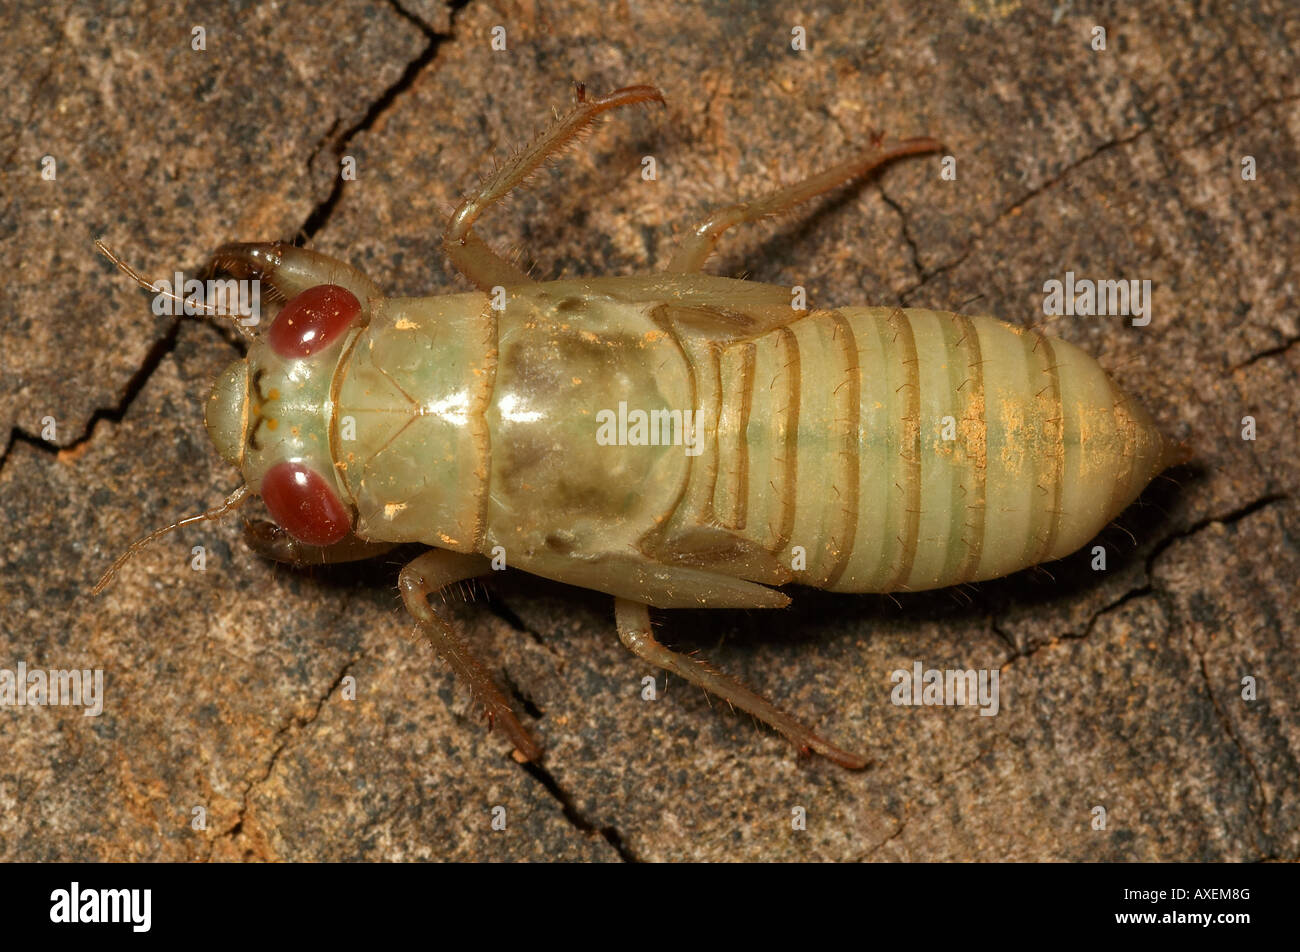 INSECT. Cicada nymph. Photographed in Agumbe, Karnataka, INDIA. Stock Photo